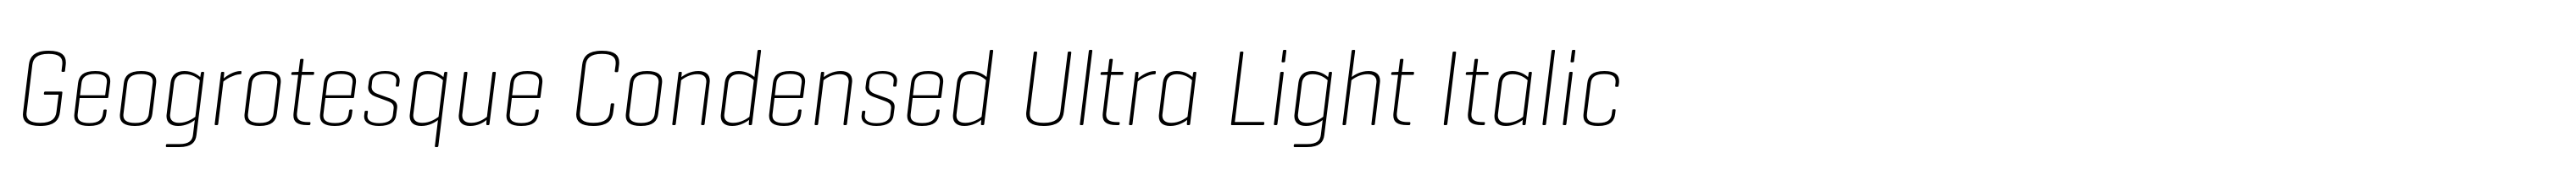 Geogrotesque Condensed Ultra Light Italic